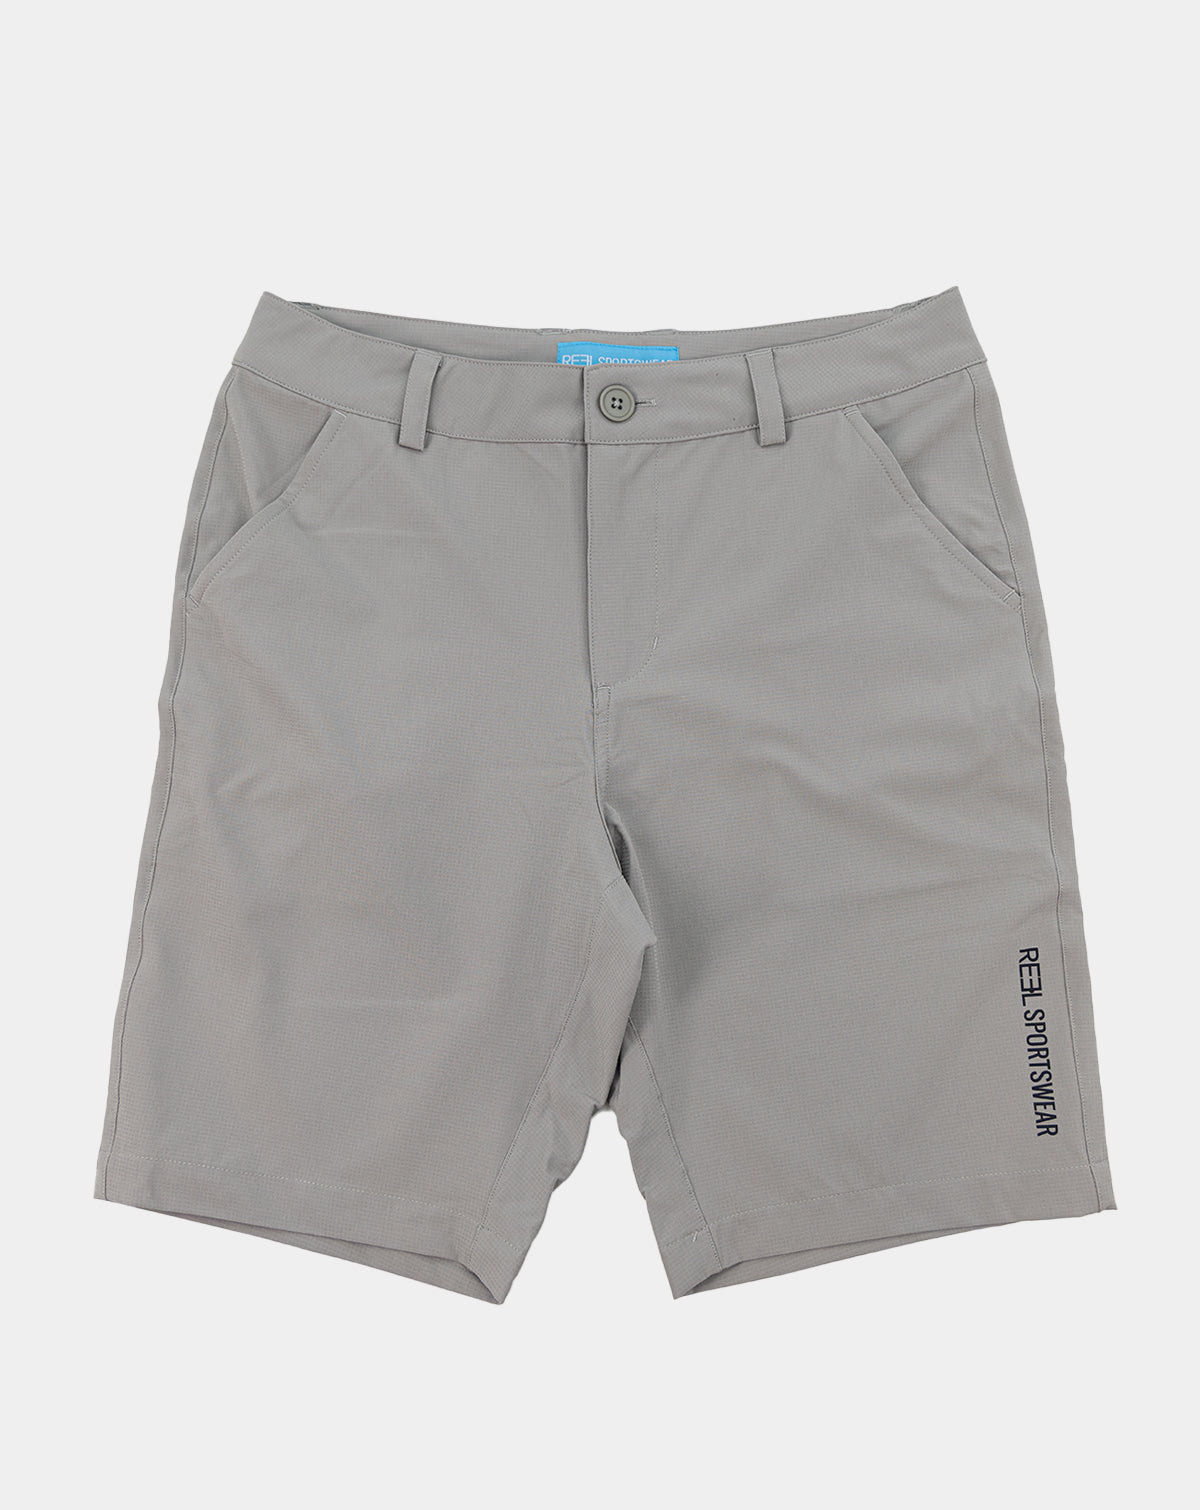 Tidal+ fishing Shorts - Reel Sportswear performance bottoms - Grey